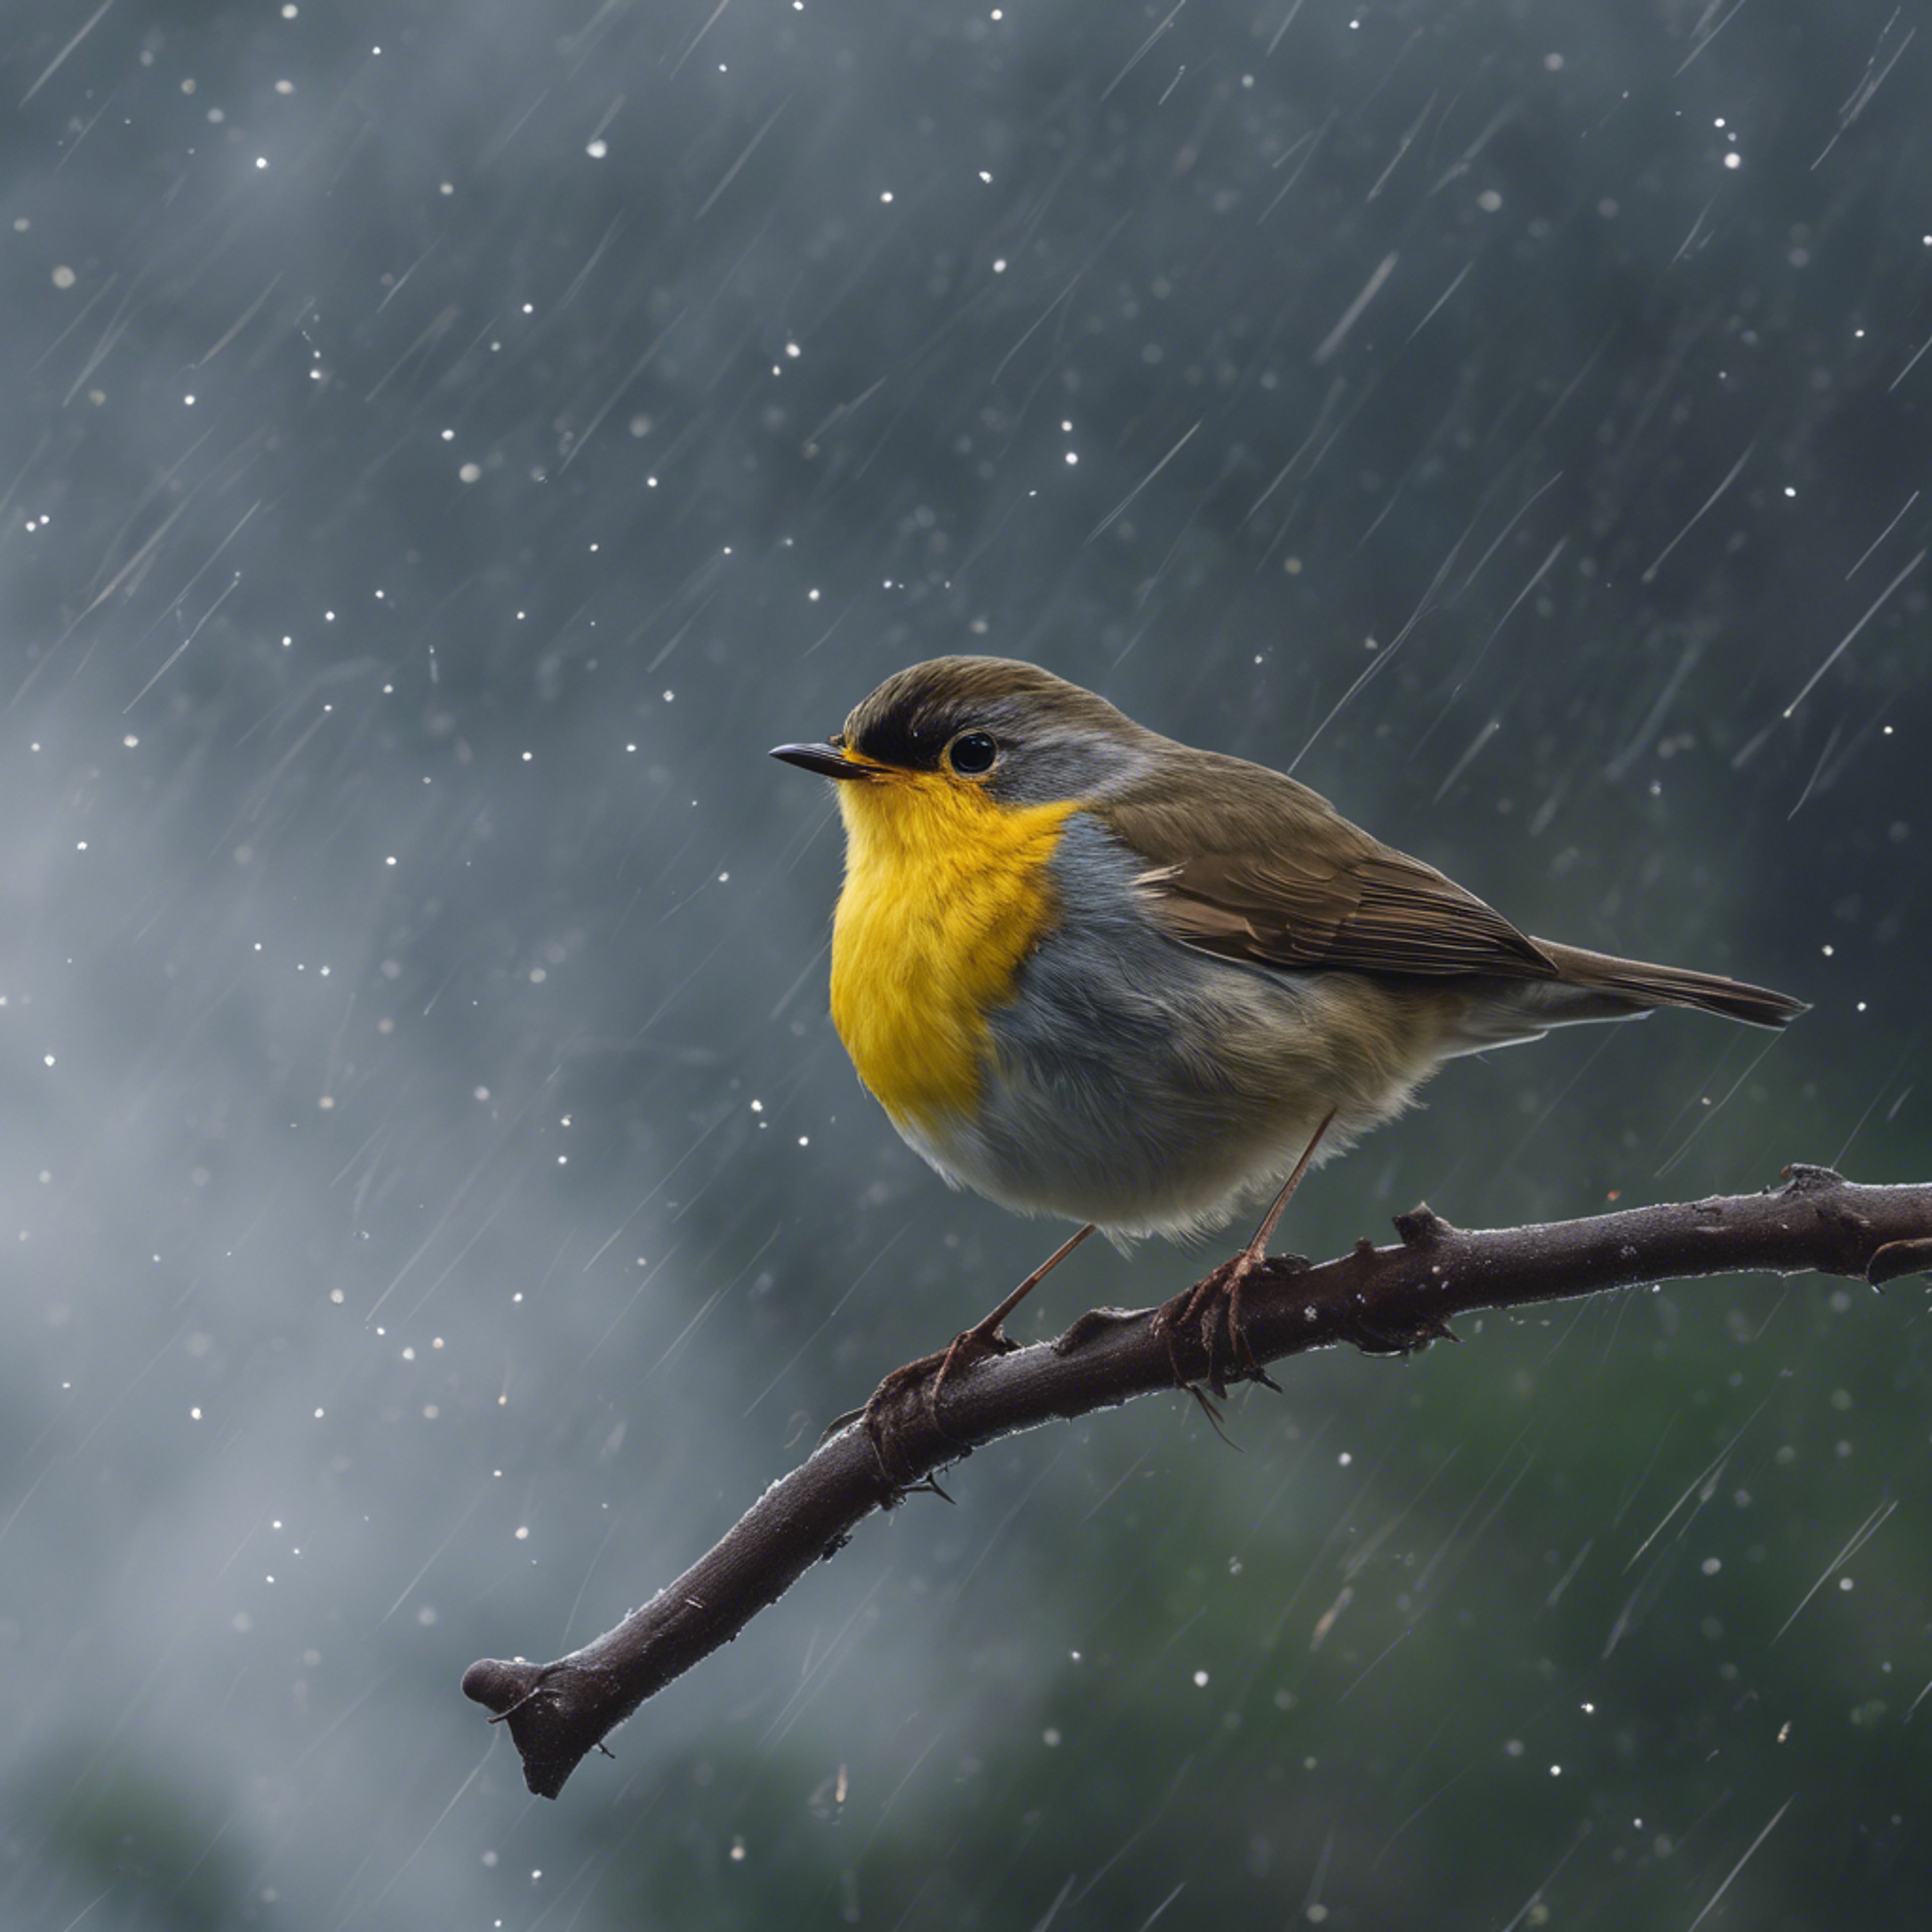 A yellow-breasted robin in mid-flight against a dark, stormy sky. 벽지[14716aee78274faeac04]